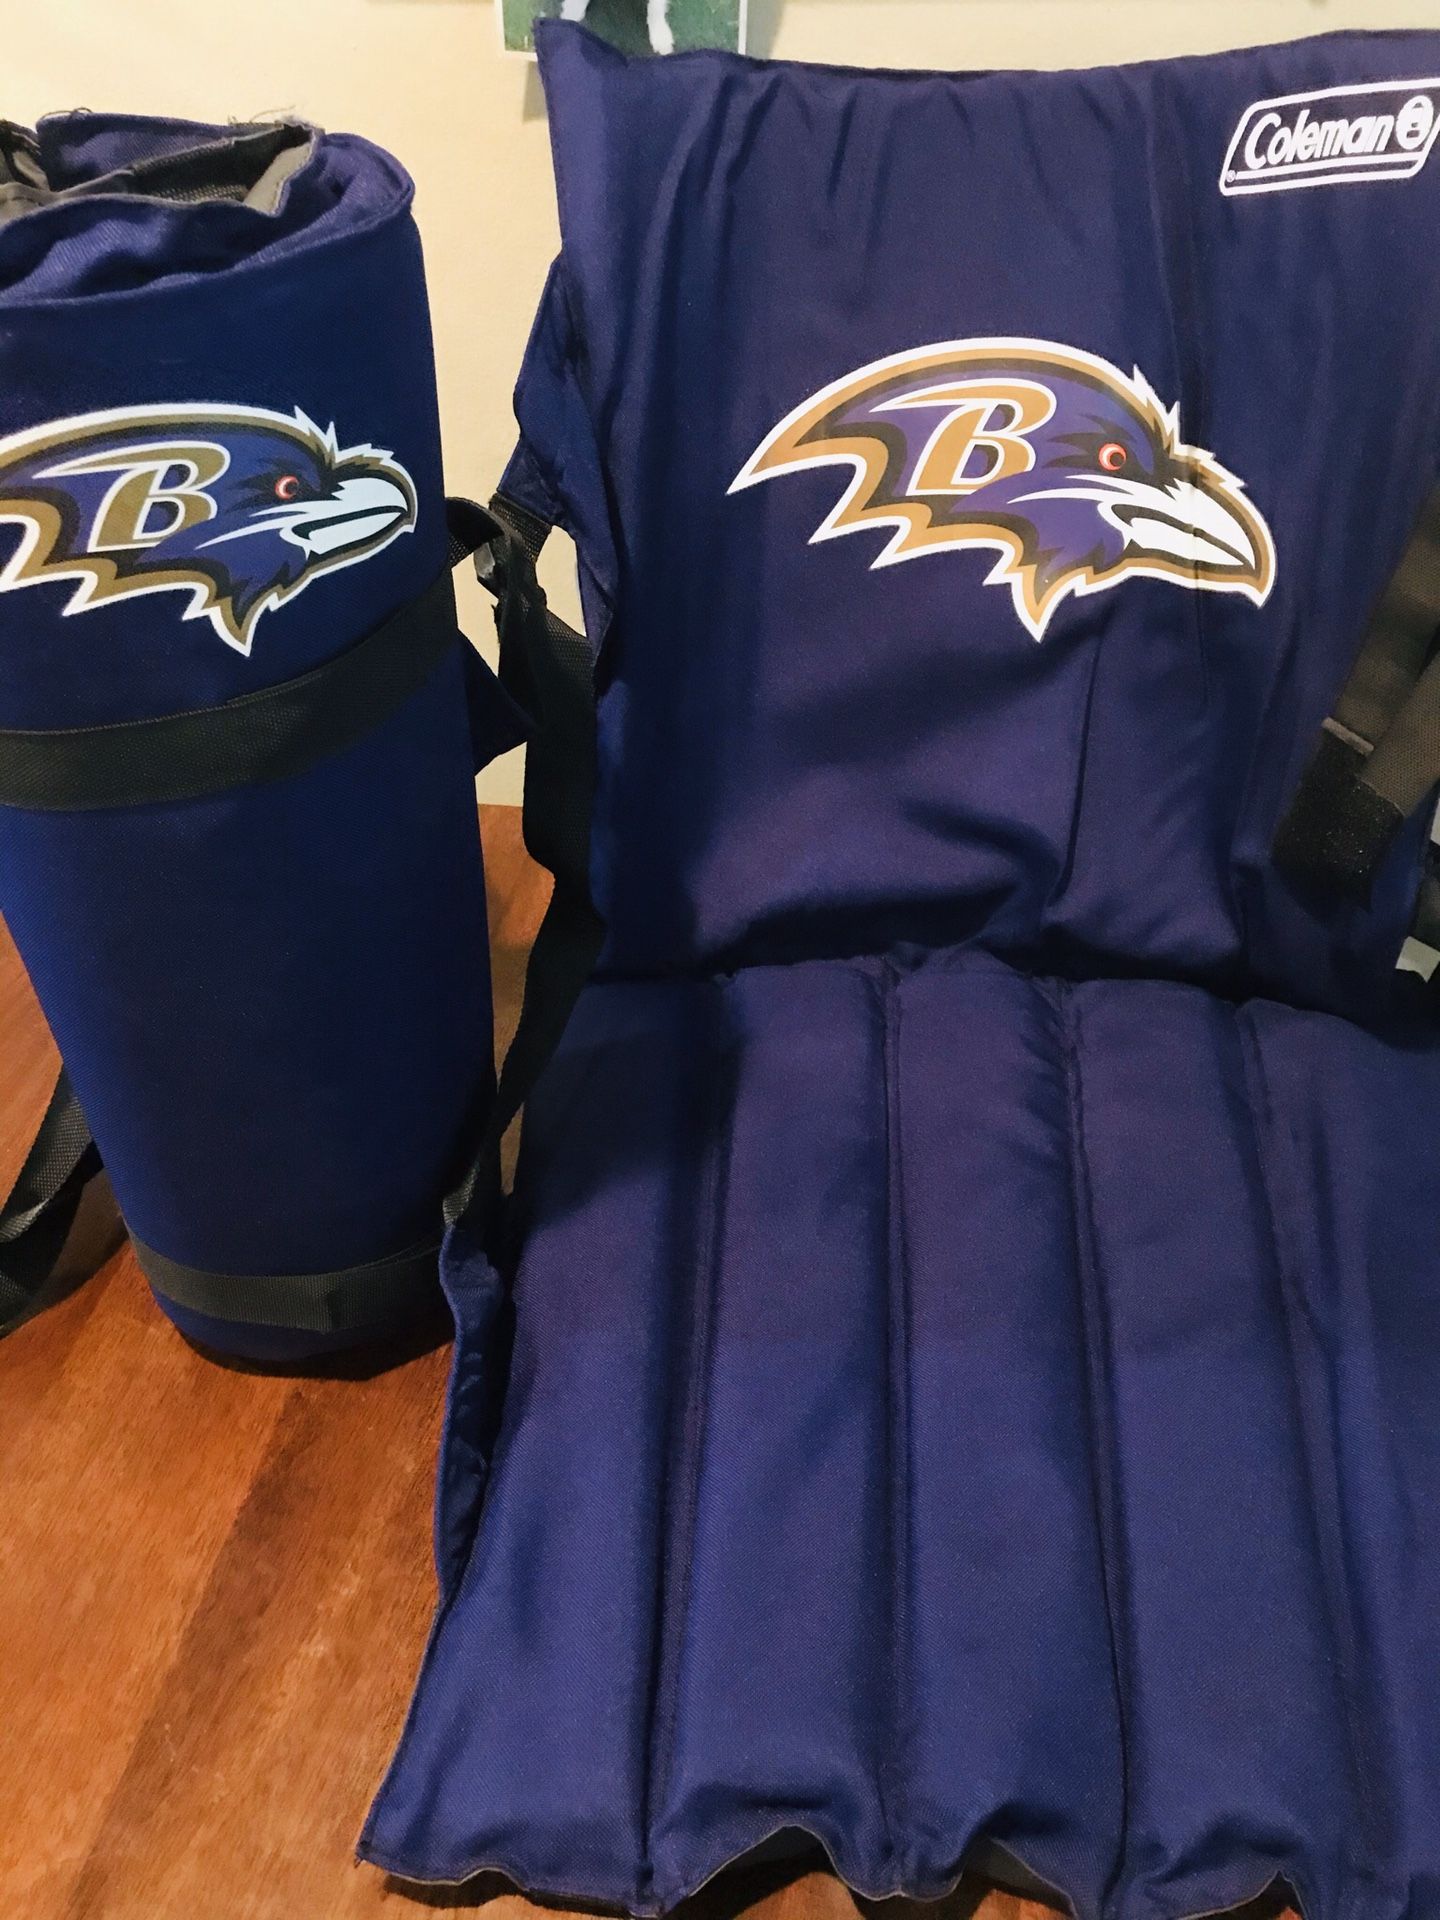 NFL Ravens roll-up stadium cushions, set of 2!